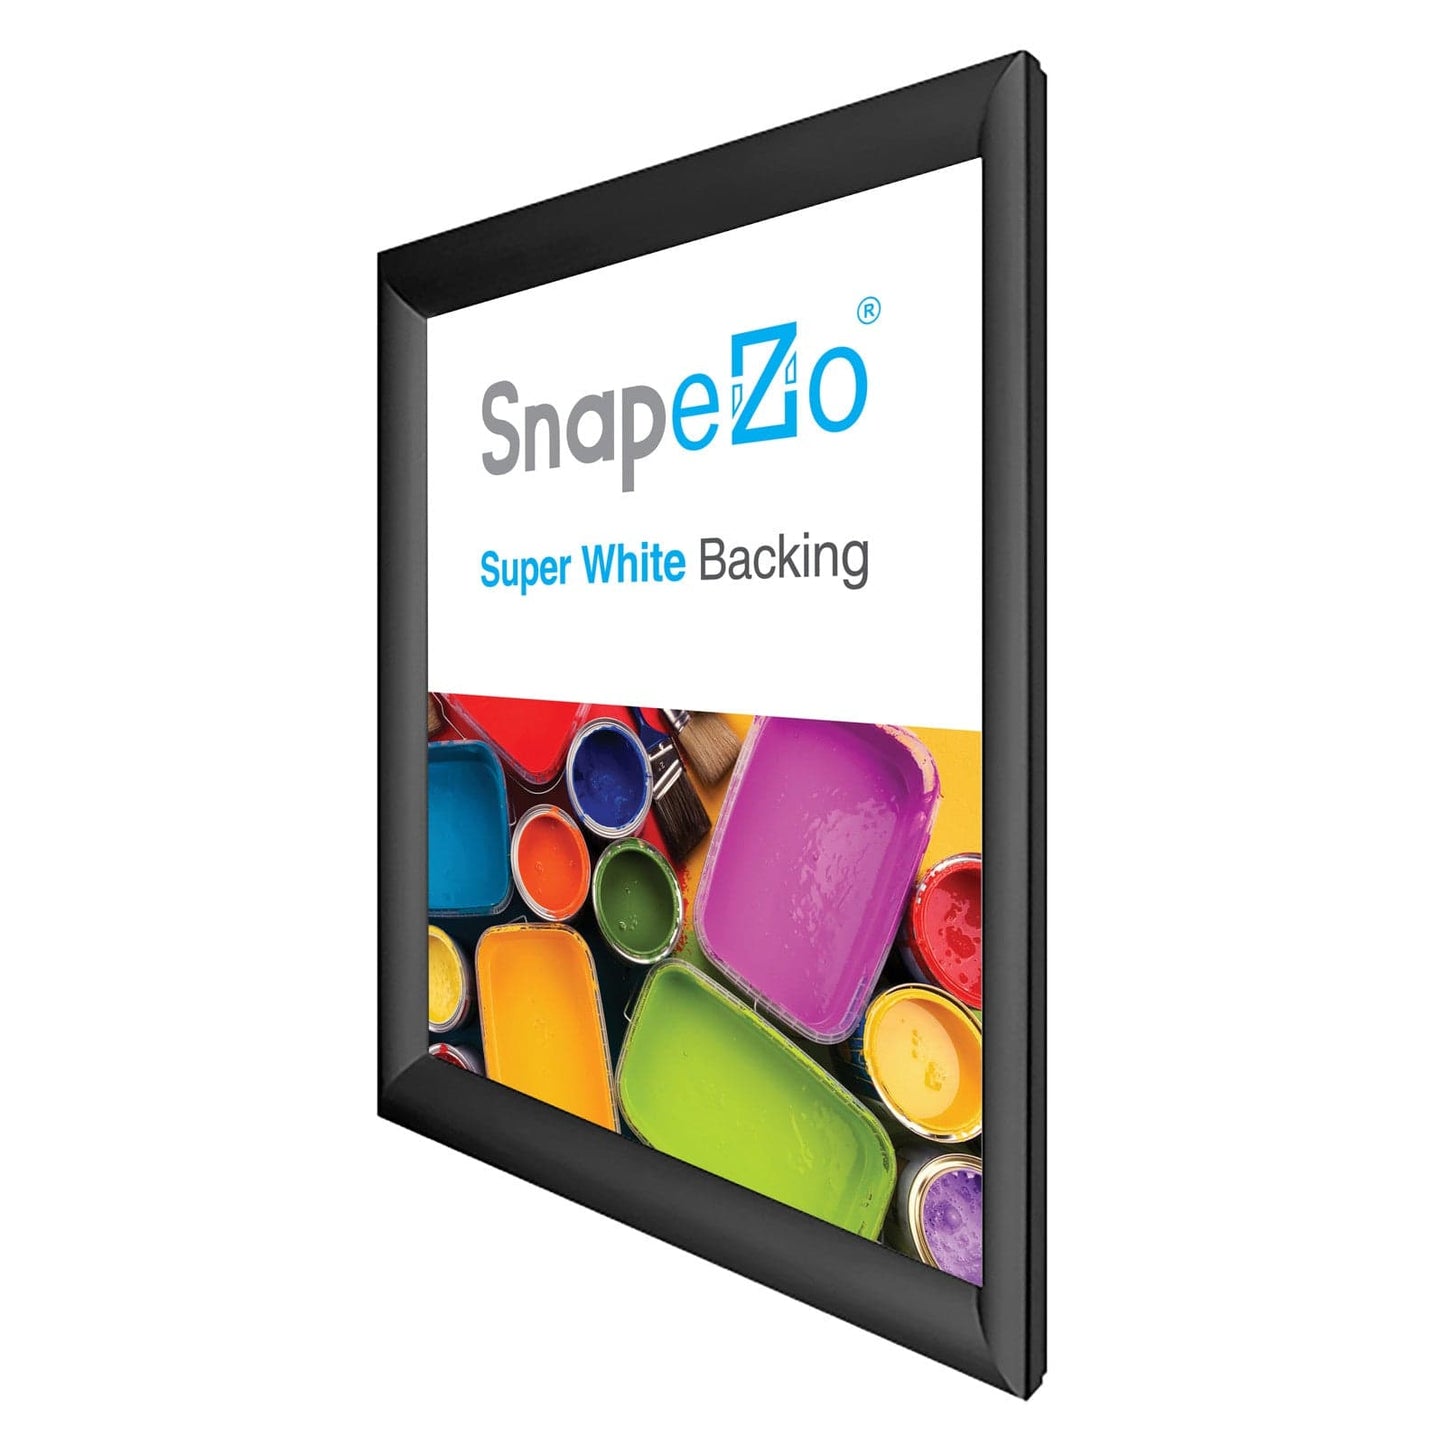 29x39 Black SnapeZo® Snap Frame - 1.2" Profile - Snap Frames Direct